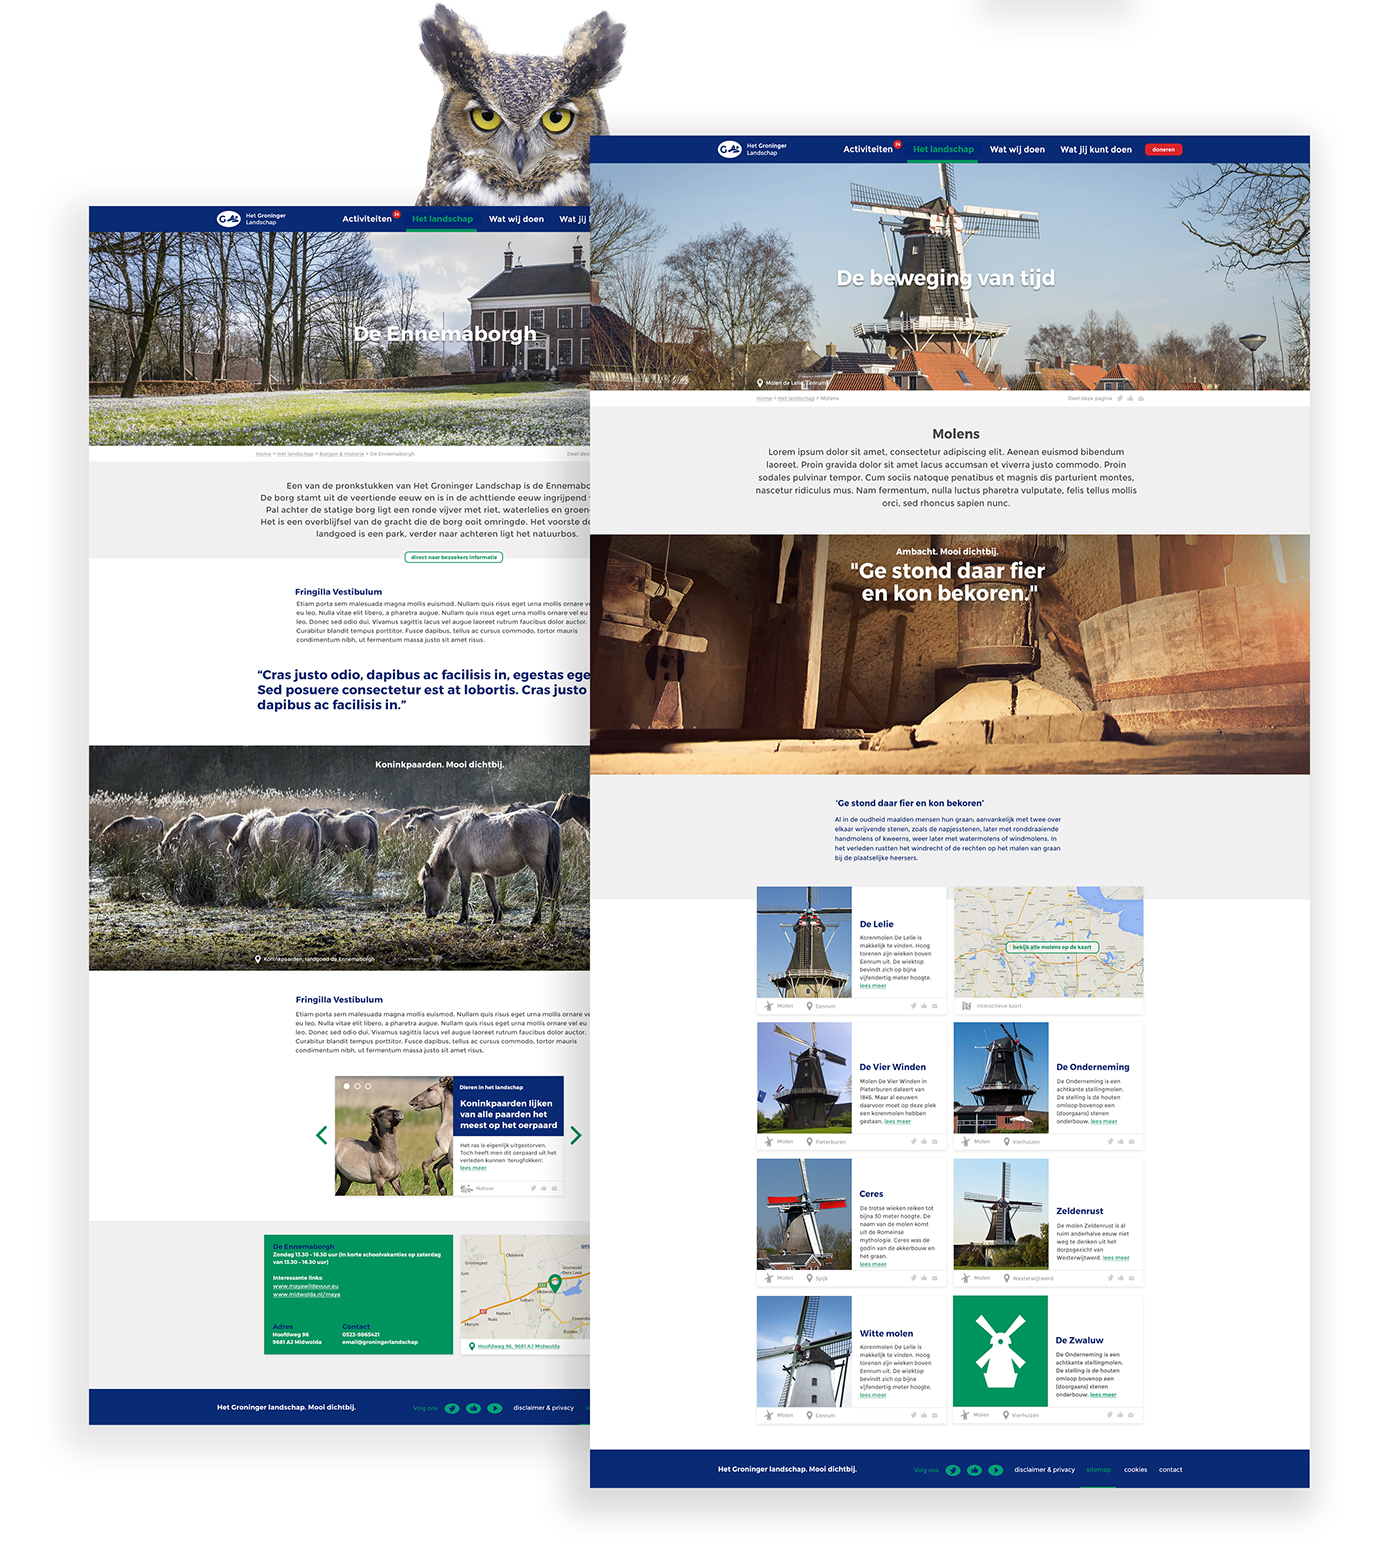 charity foundation Nature wildlife cultural heritage activities Webdesign Interaction design  user interface design groningen